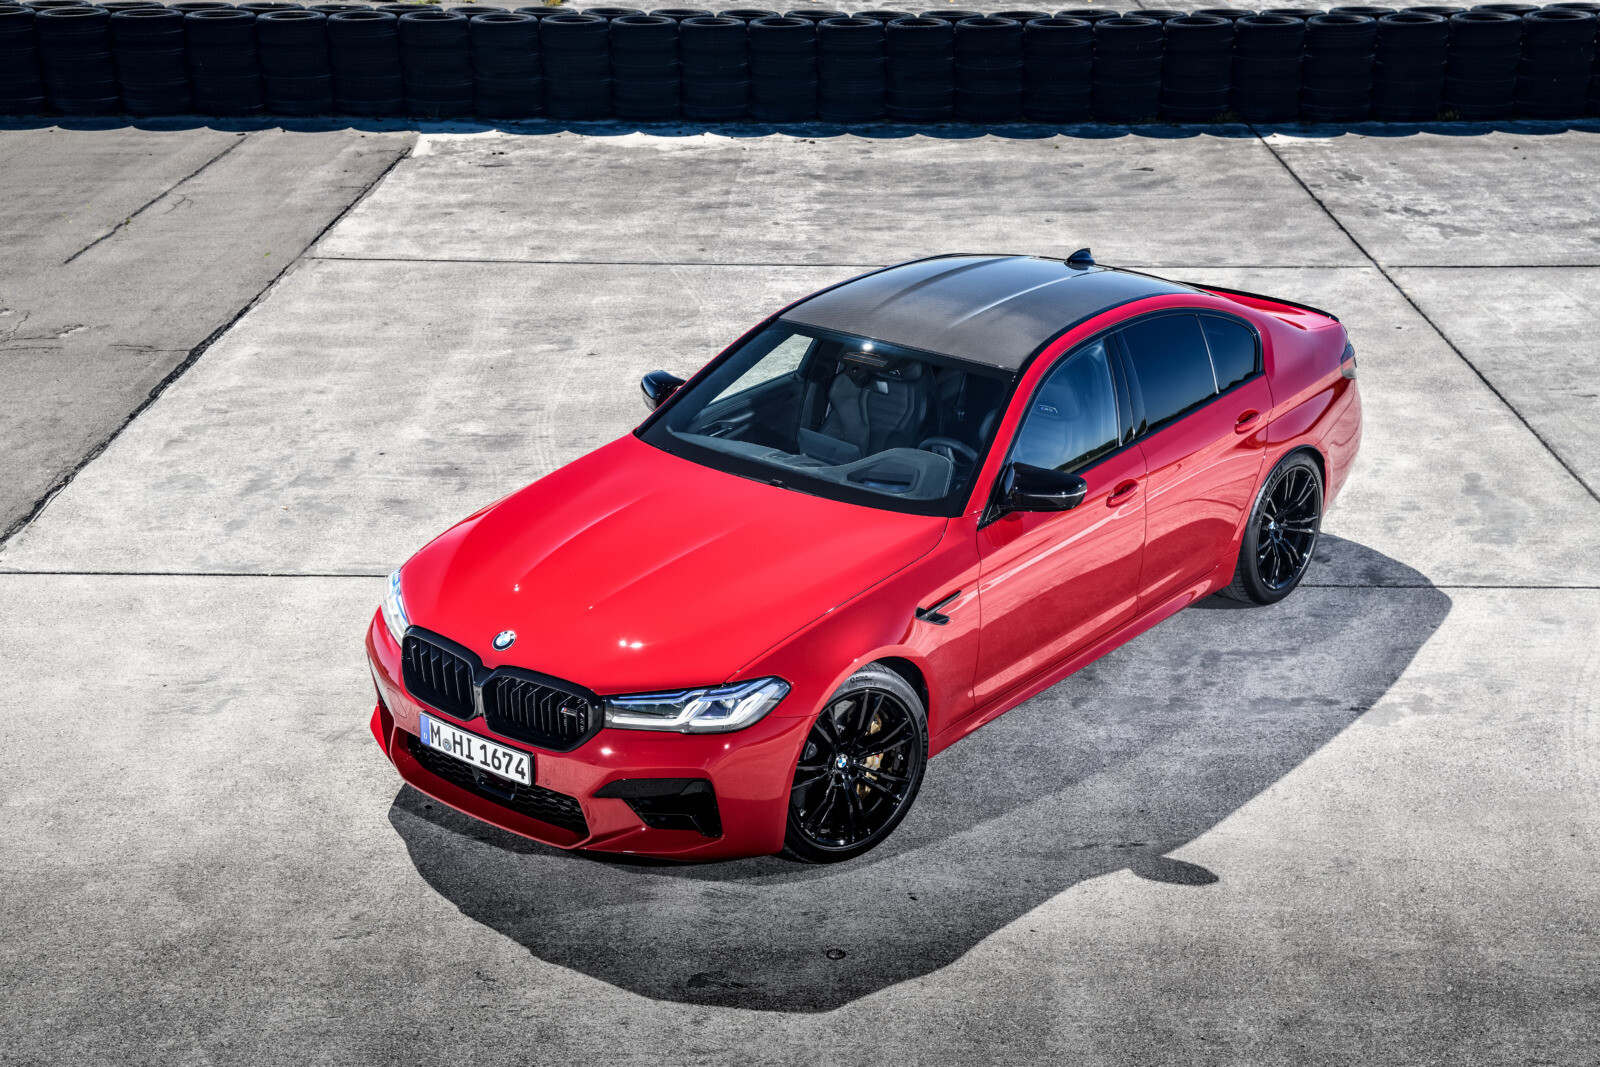 BMW、改良新型のM5を本国で発表。一層迫力を増した風貌とM8由来のMモードスイッチで進化を遂げる